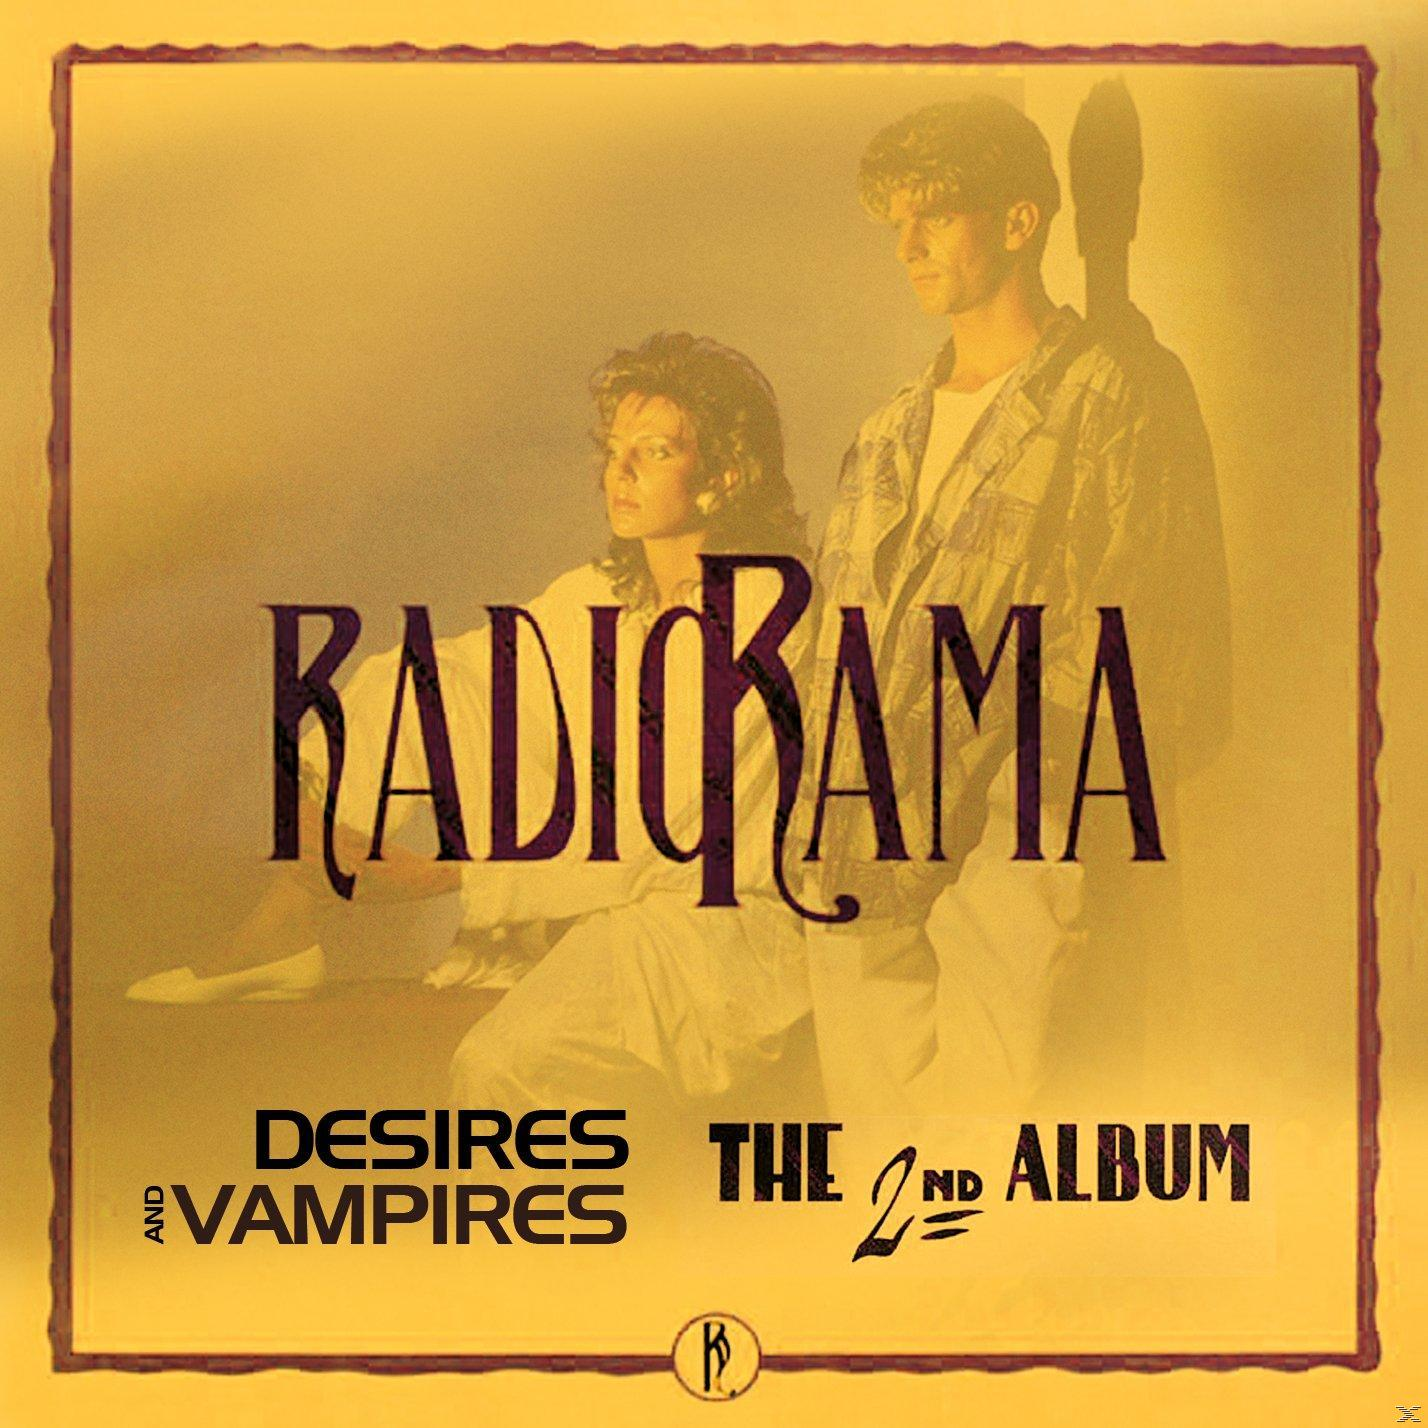 Radiorama - Desires And (CD) 2nd Vampires-The - Album